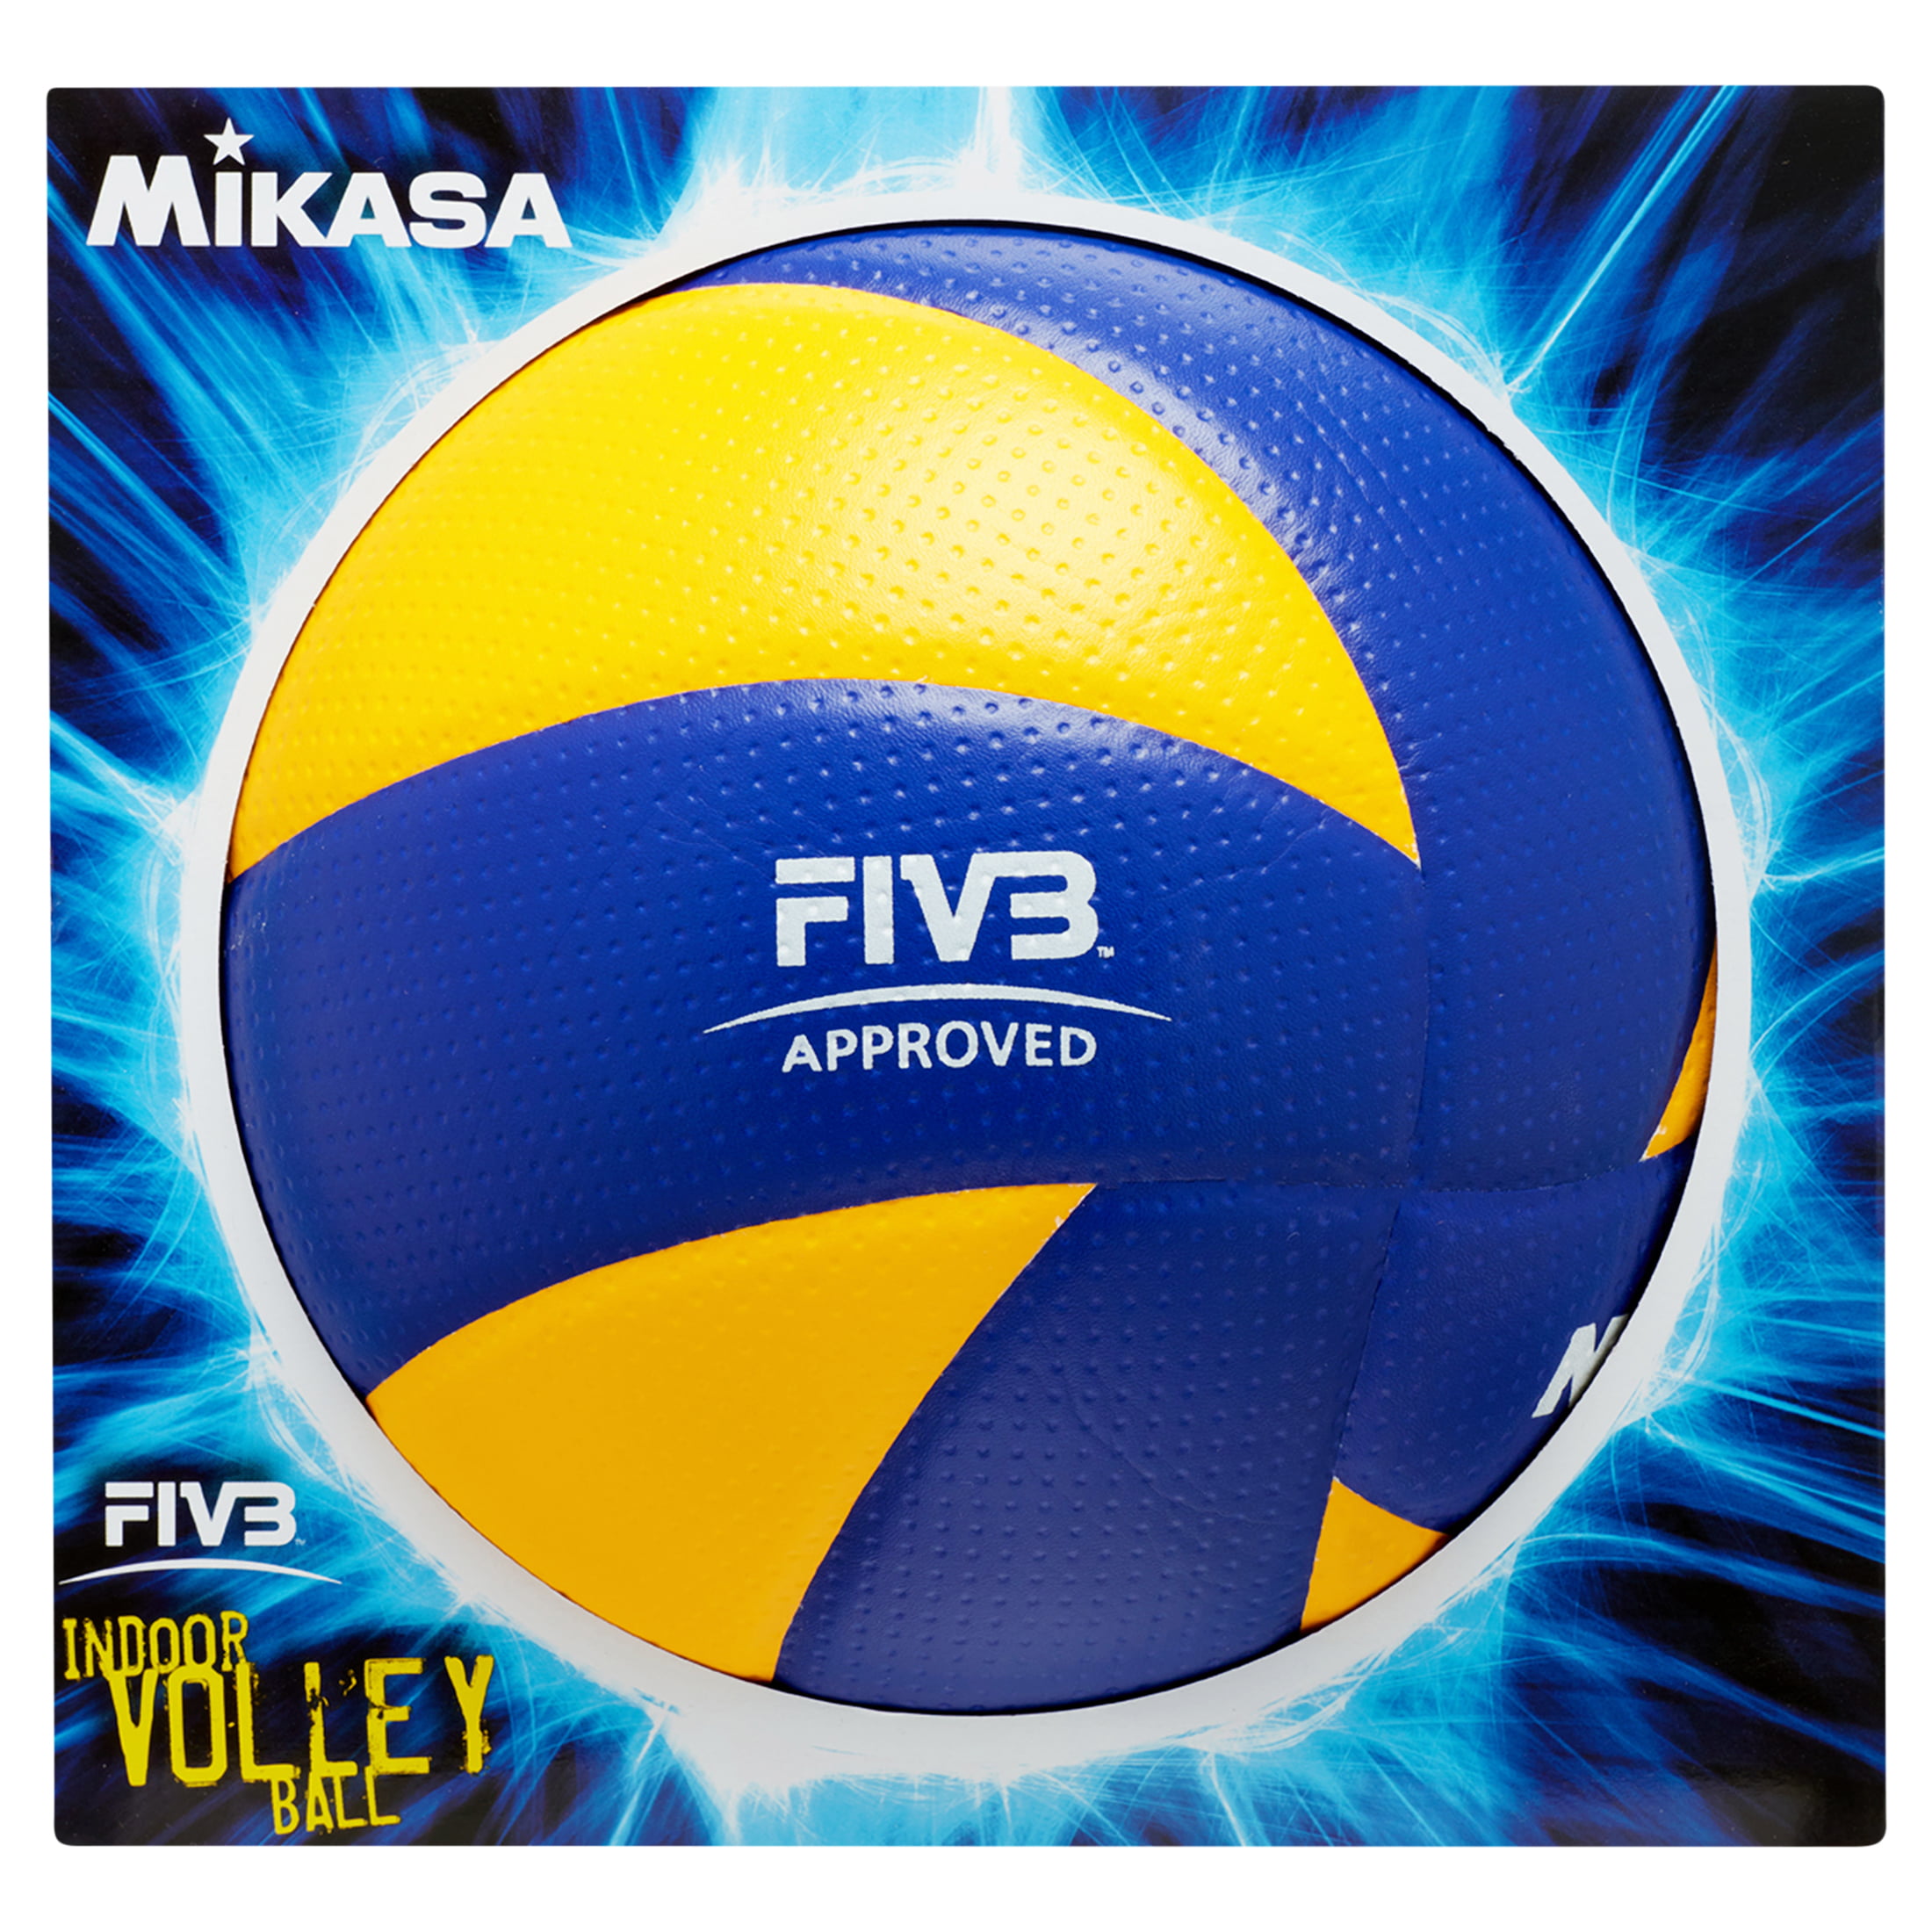 Mikasa MVA 200 Volleyball-Cev Hallenvolleyball Yellow Green 1162 5 